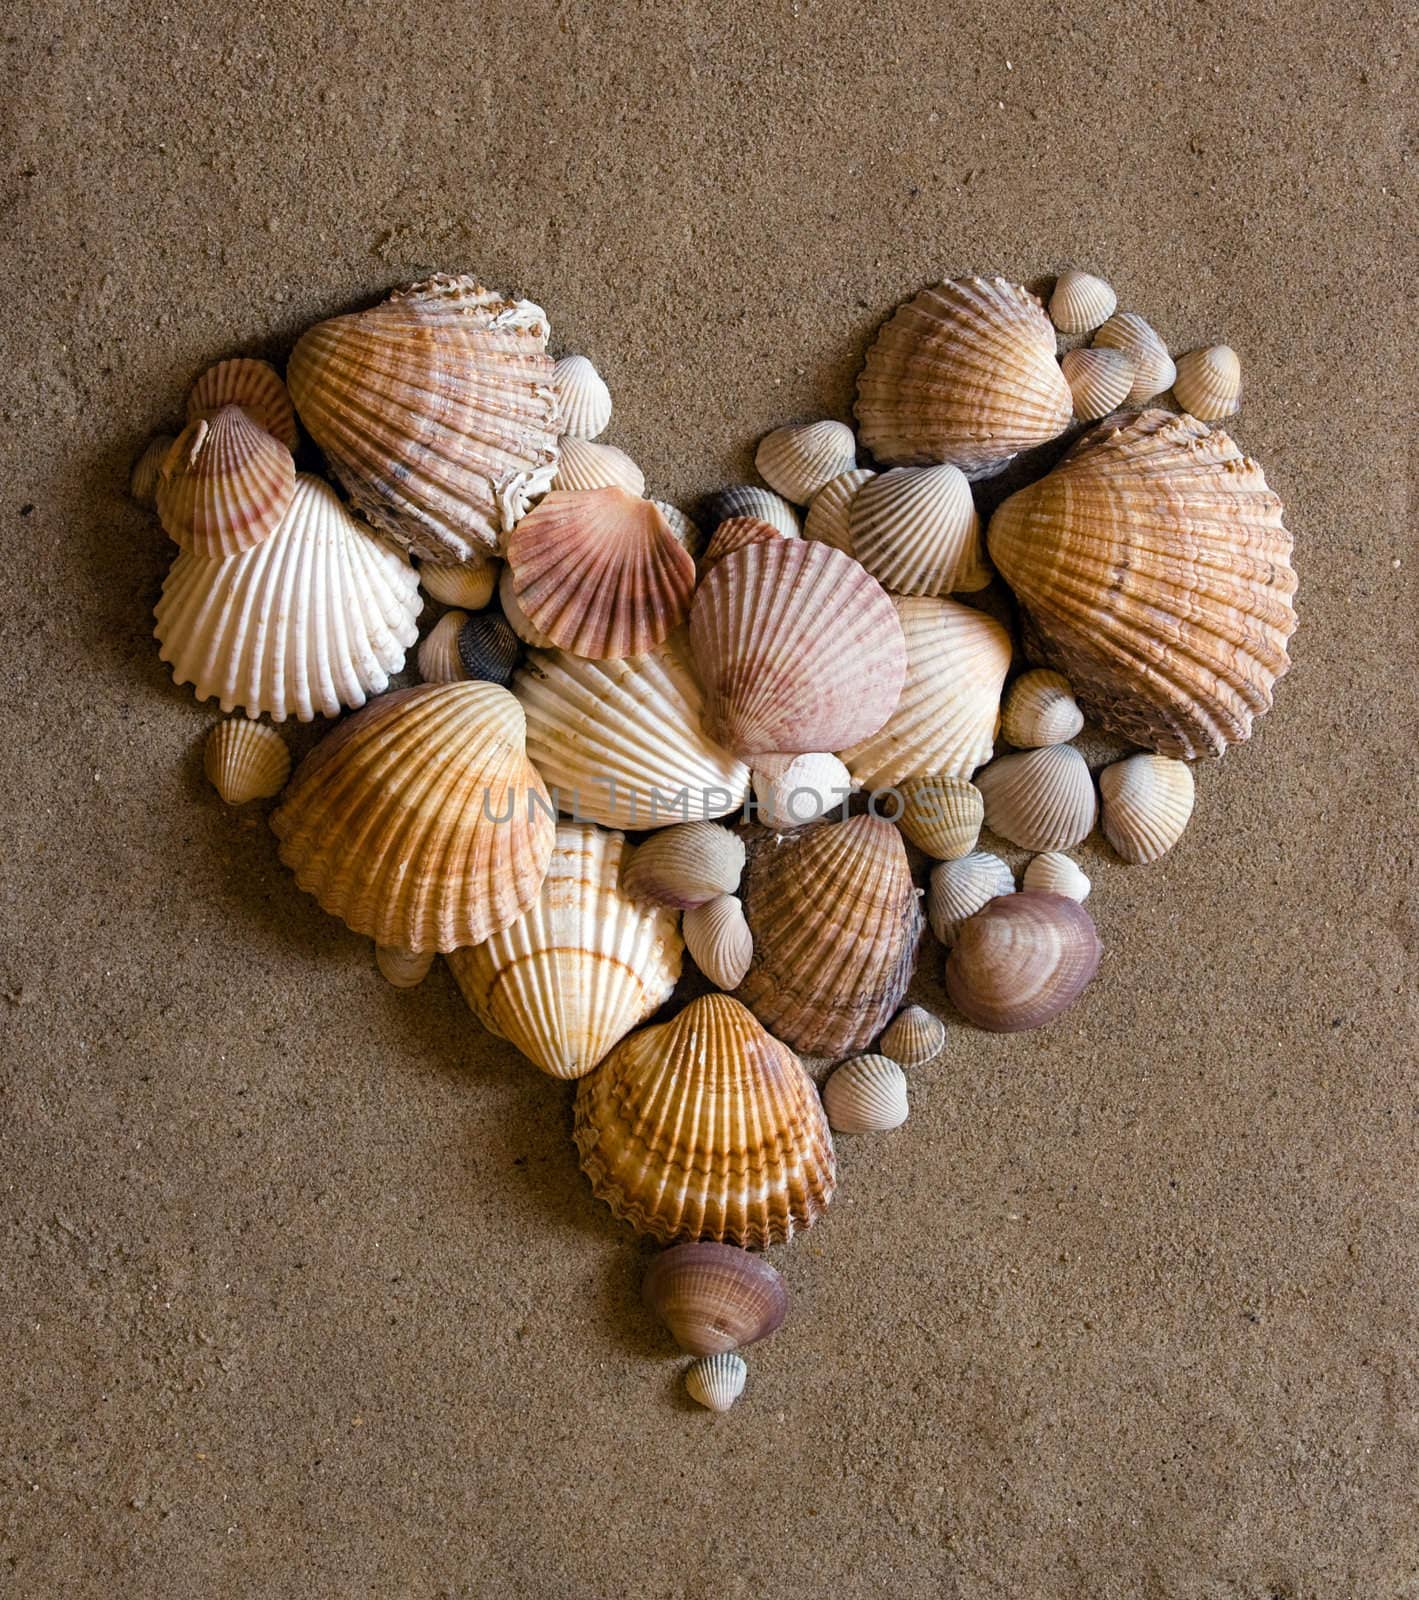 shell heart on sand by chrisroll